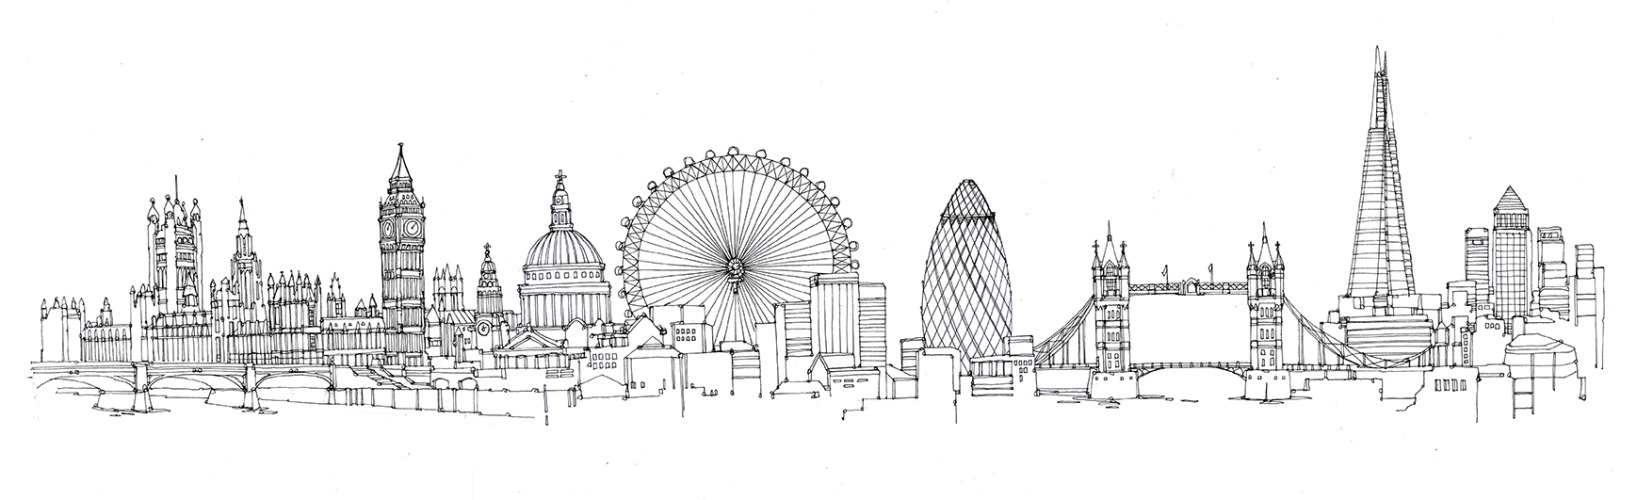 London Skyline Drawing